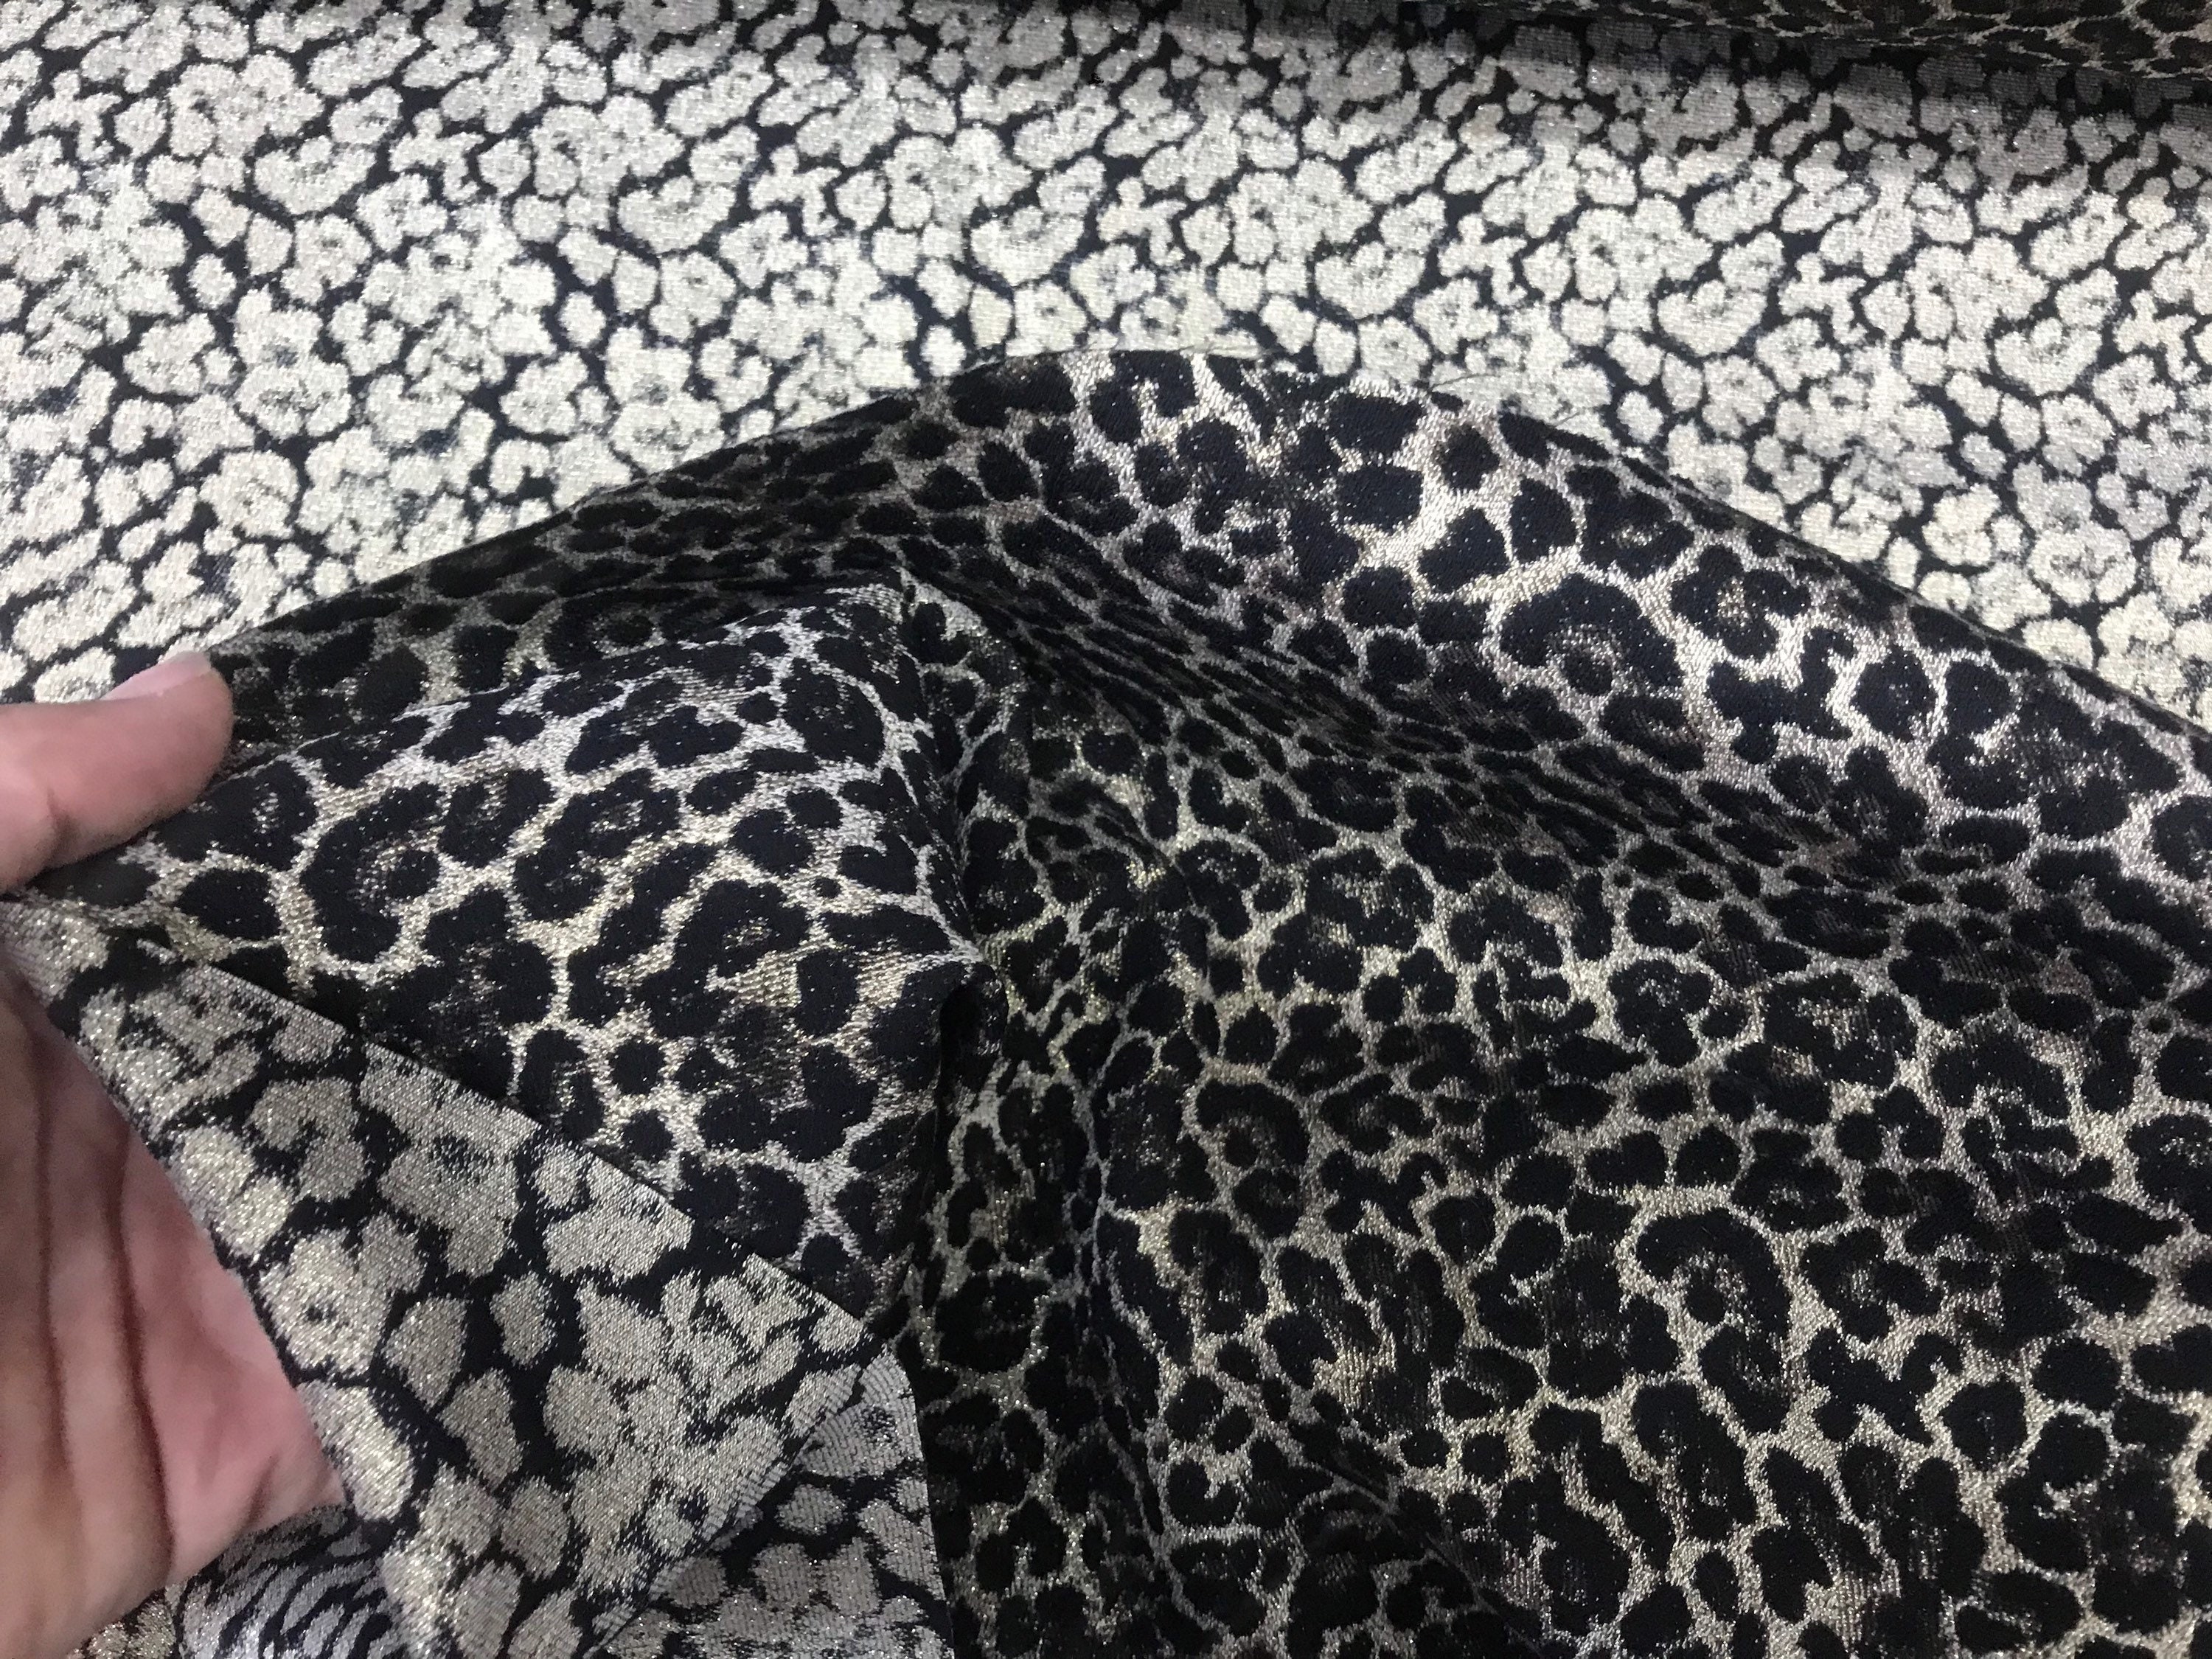 Leopard brocade fabric stretch. Cheetah cotton fabric. Cheetah | Etsy